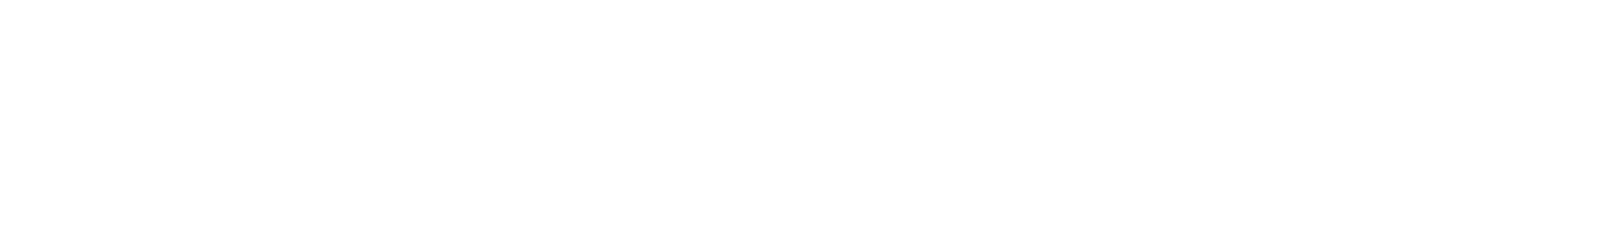 Squarespace logo large for dark backgrounds (transparent PNG)